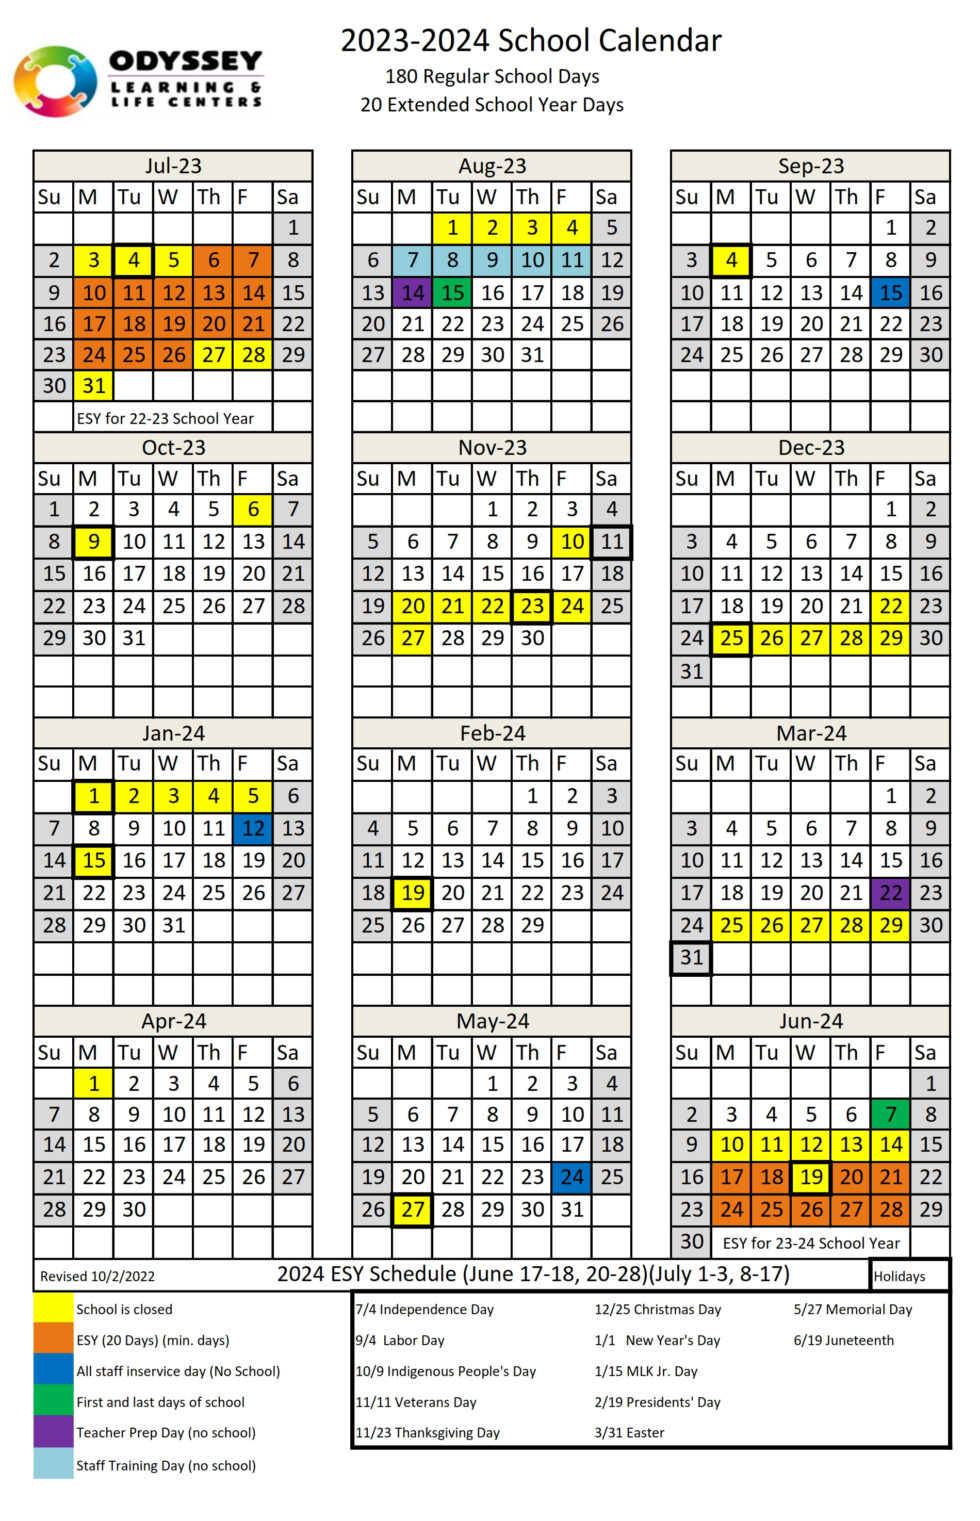 Annual School Calendar for Odyssey Learning Center